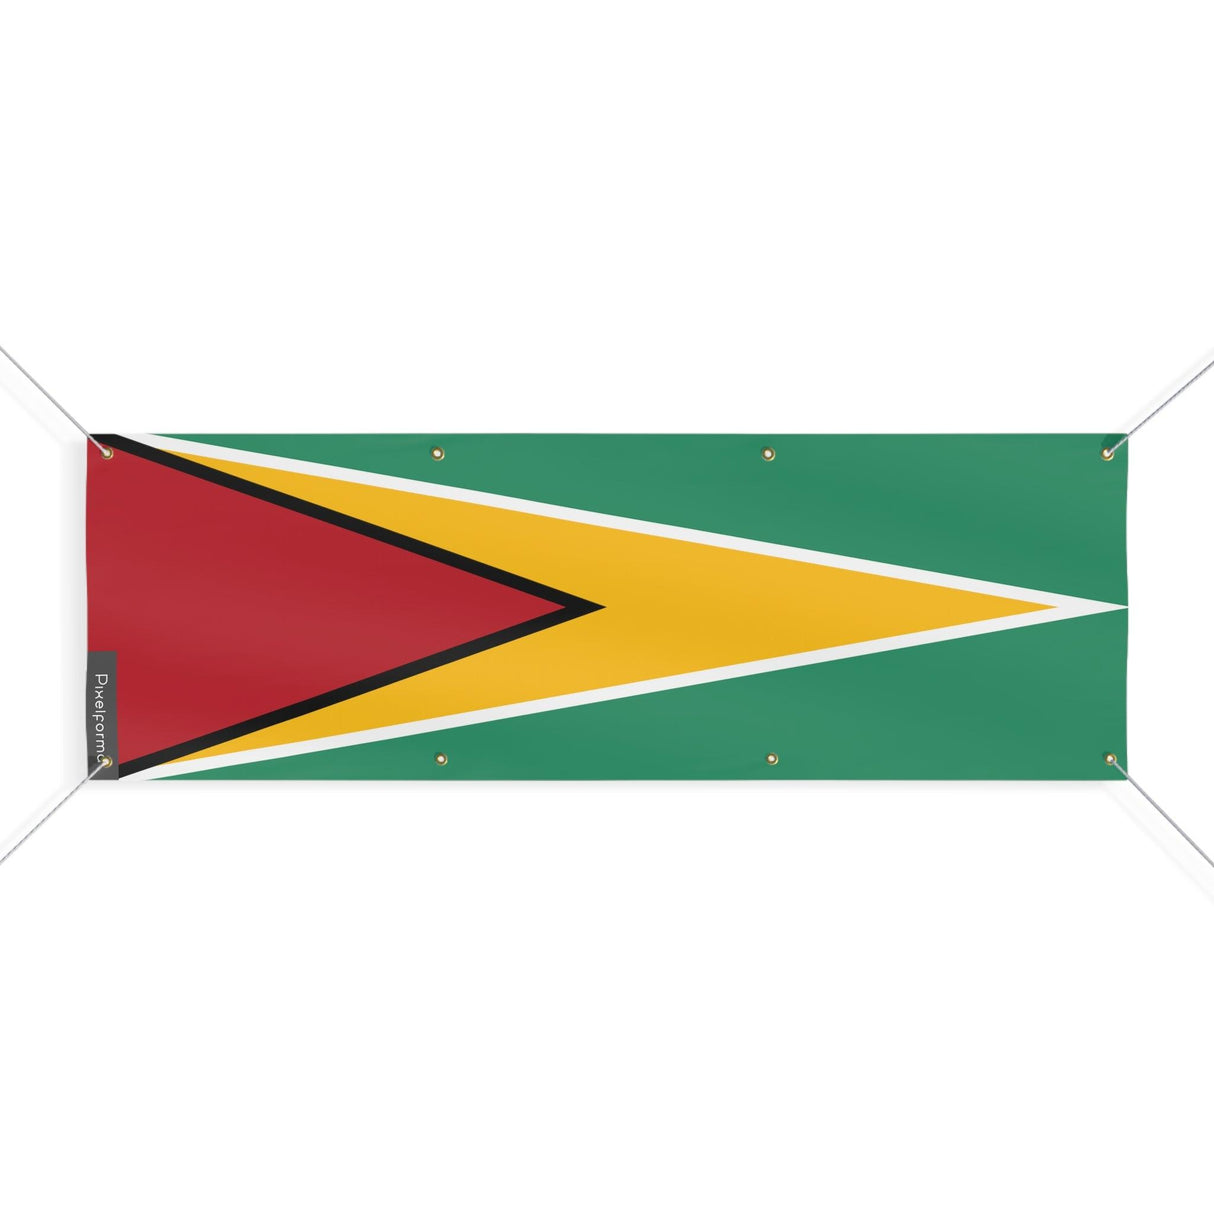 Drapeau du Guyana 8 Oeillets en plusieurs tailles - Pixelforma 